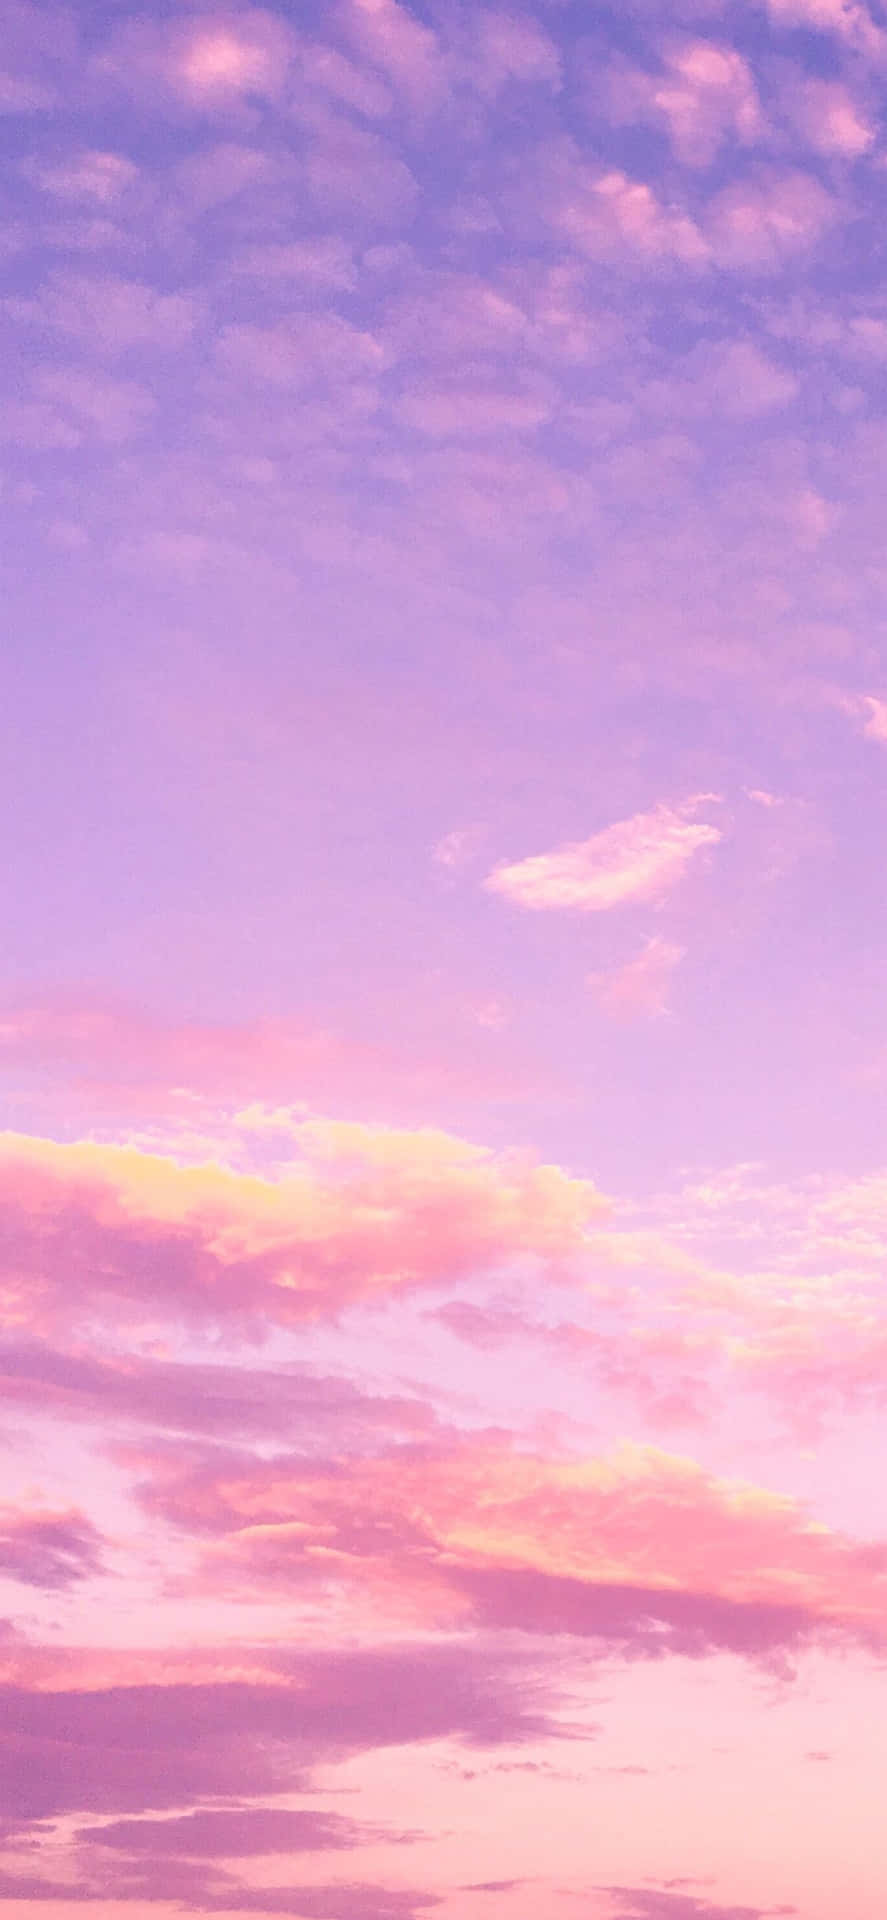 Stunning Pink Sky at Twilight Wallpaper